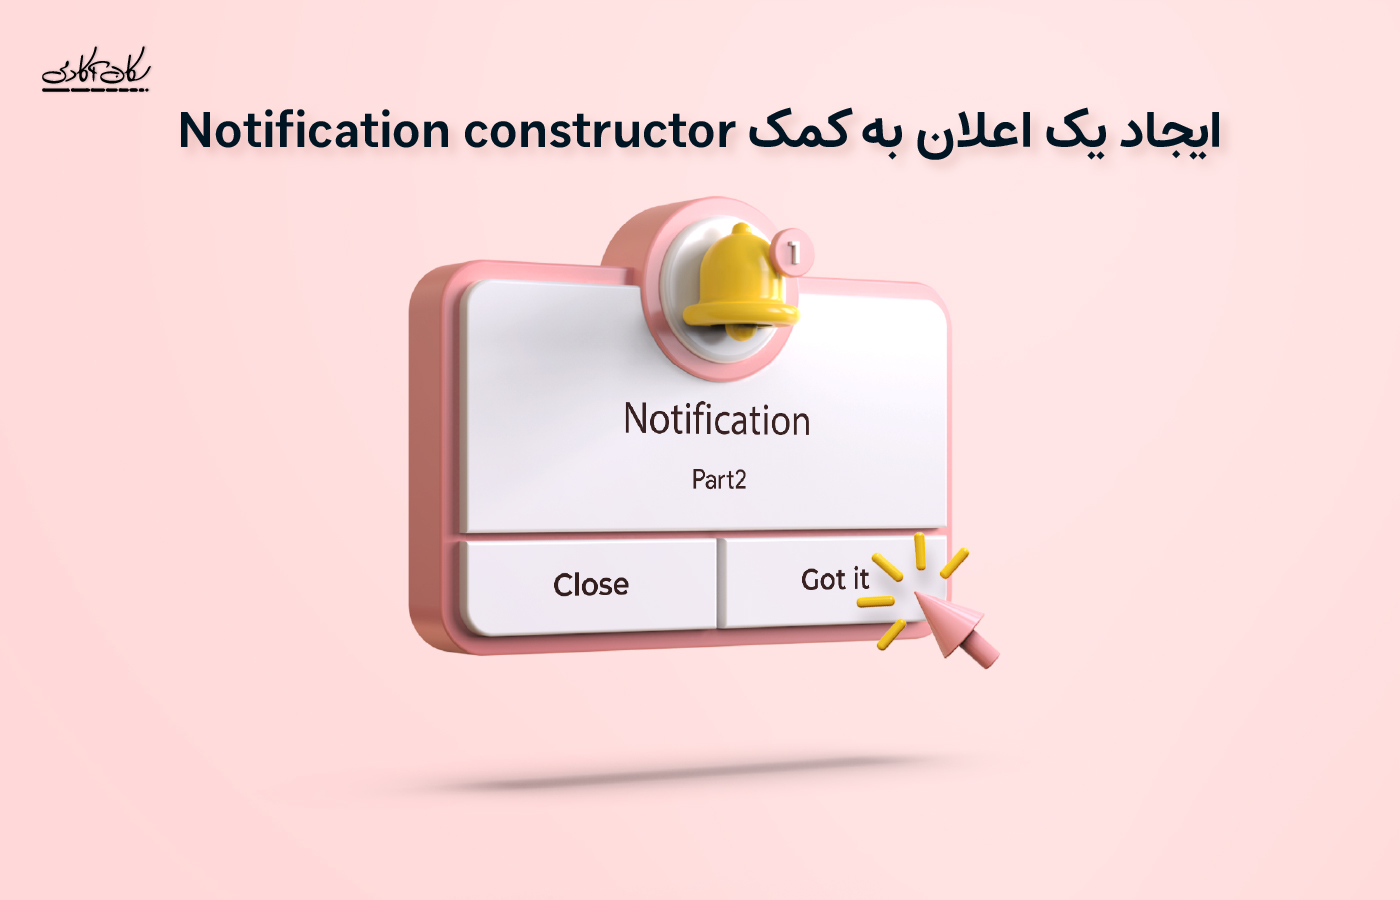 ایجاد قدم به قدم یک اعلان به کمک Notification constructor